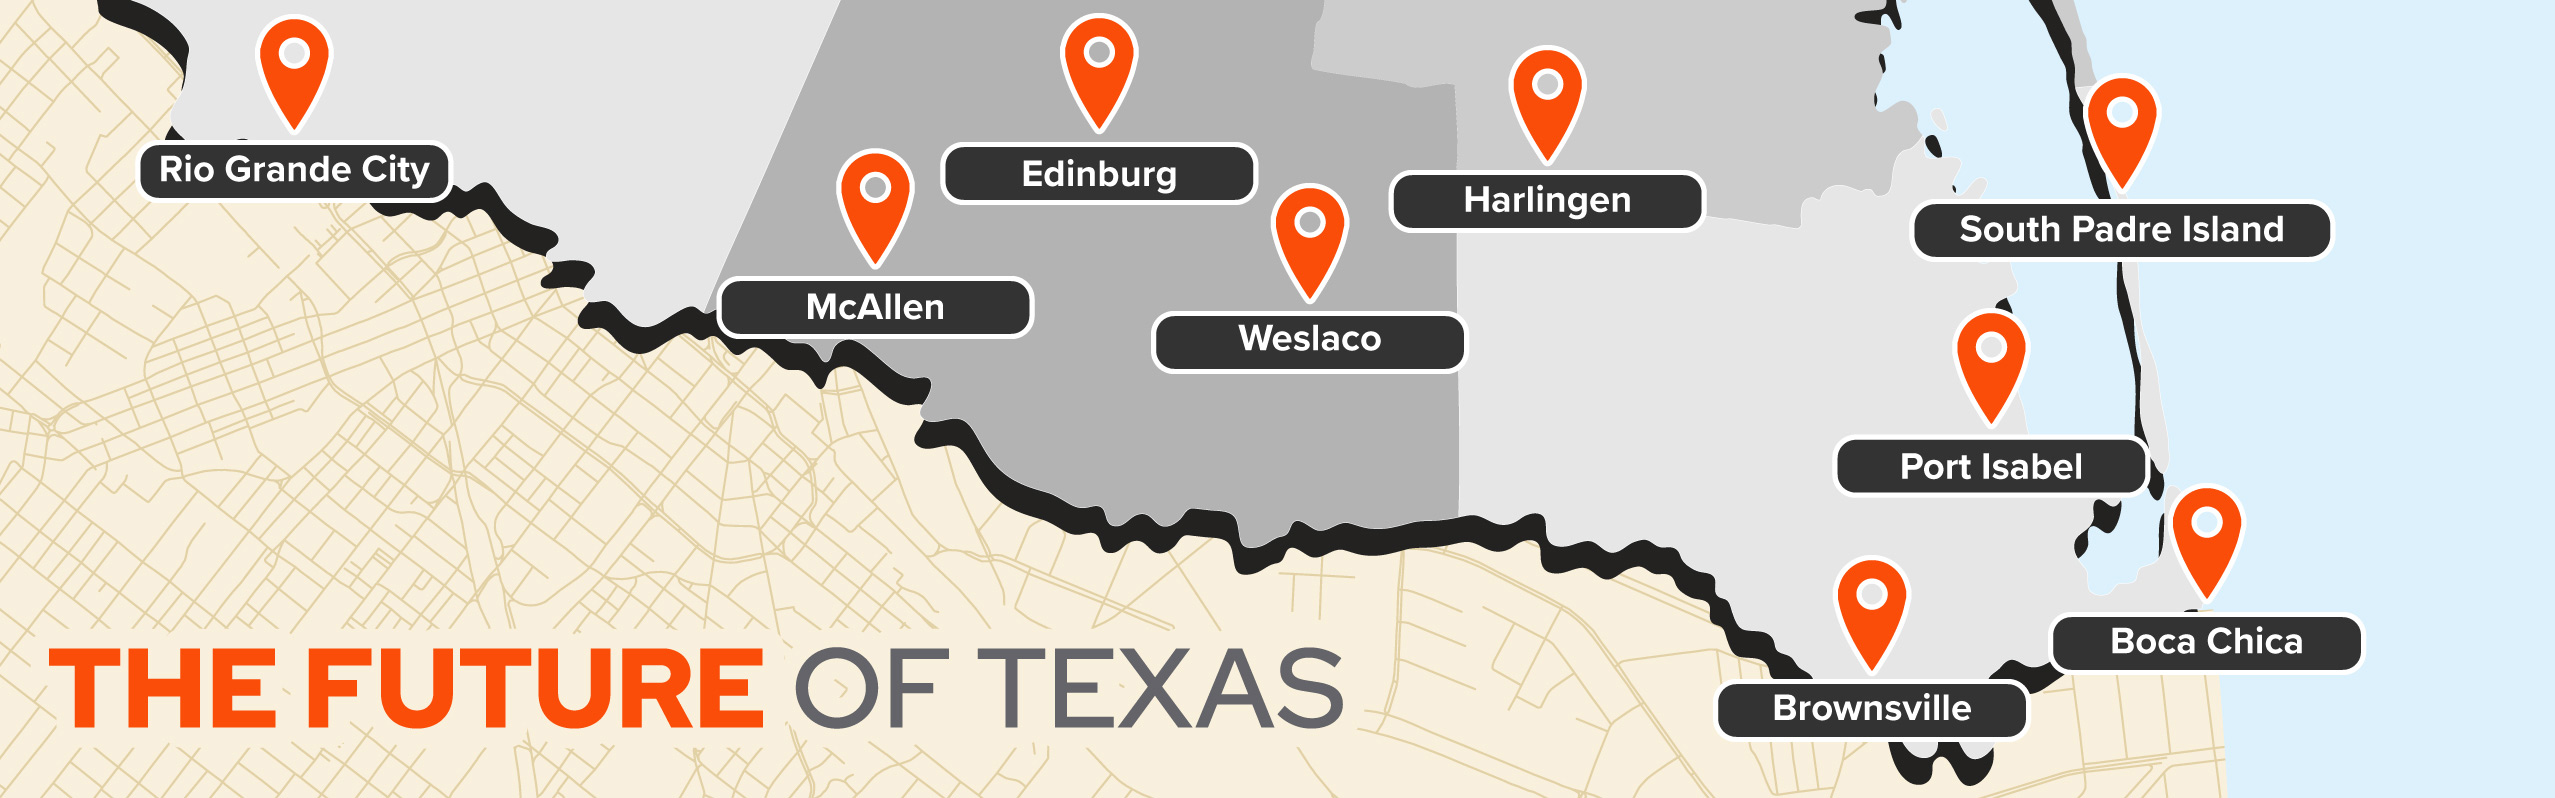 map showing utrgv locations in Edinburg, Brownsville, Halingen, McAllen, Weslaco, Rio Grande City, South Padre Island, Port Isabel, Boca Chica